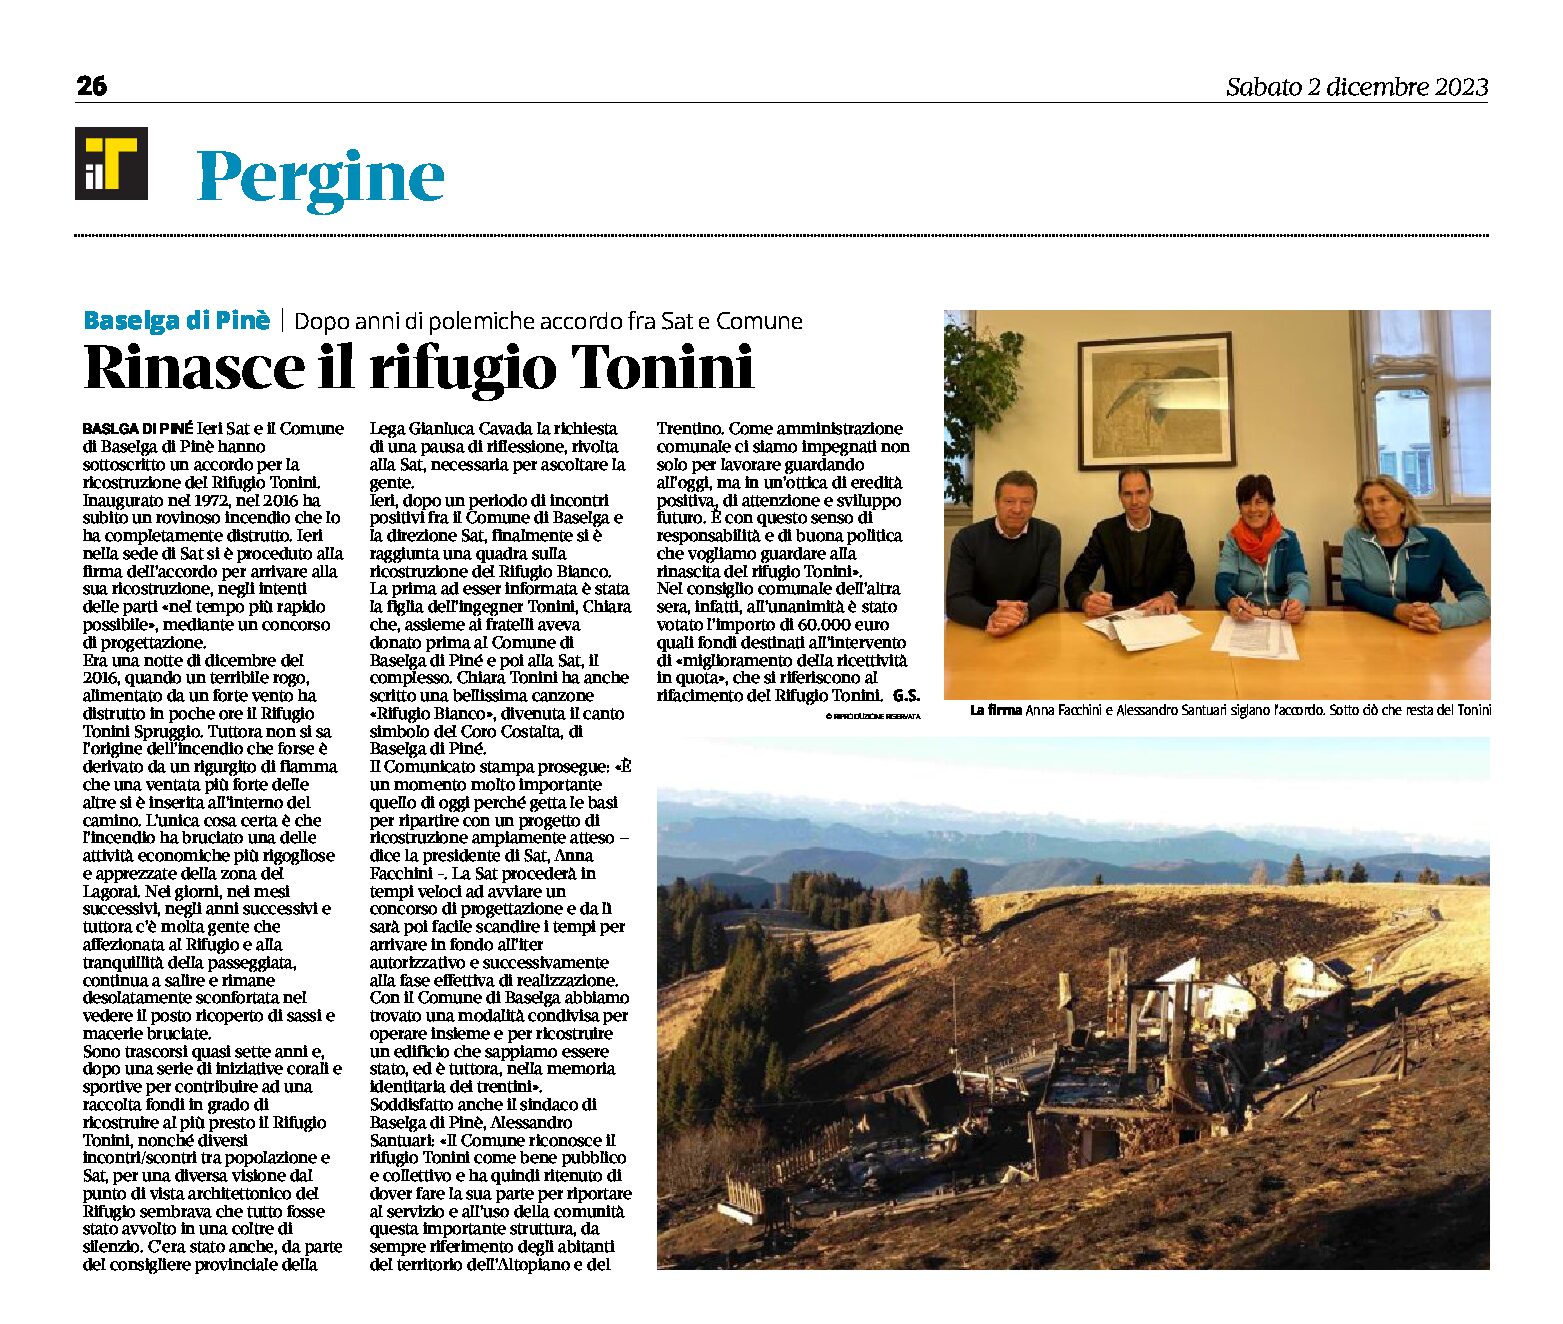 Baselga di Pinè: rinasce il rifugio Tonini